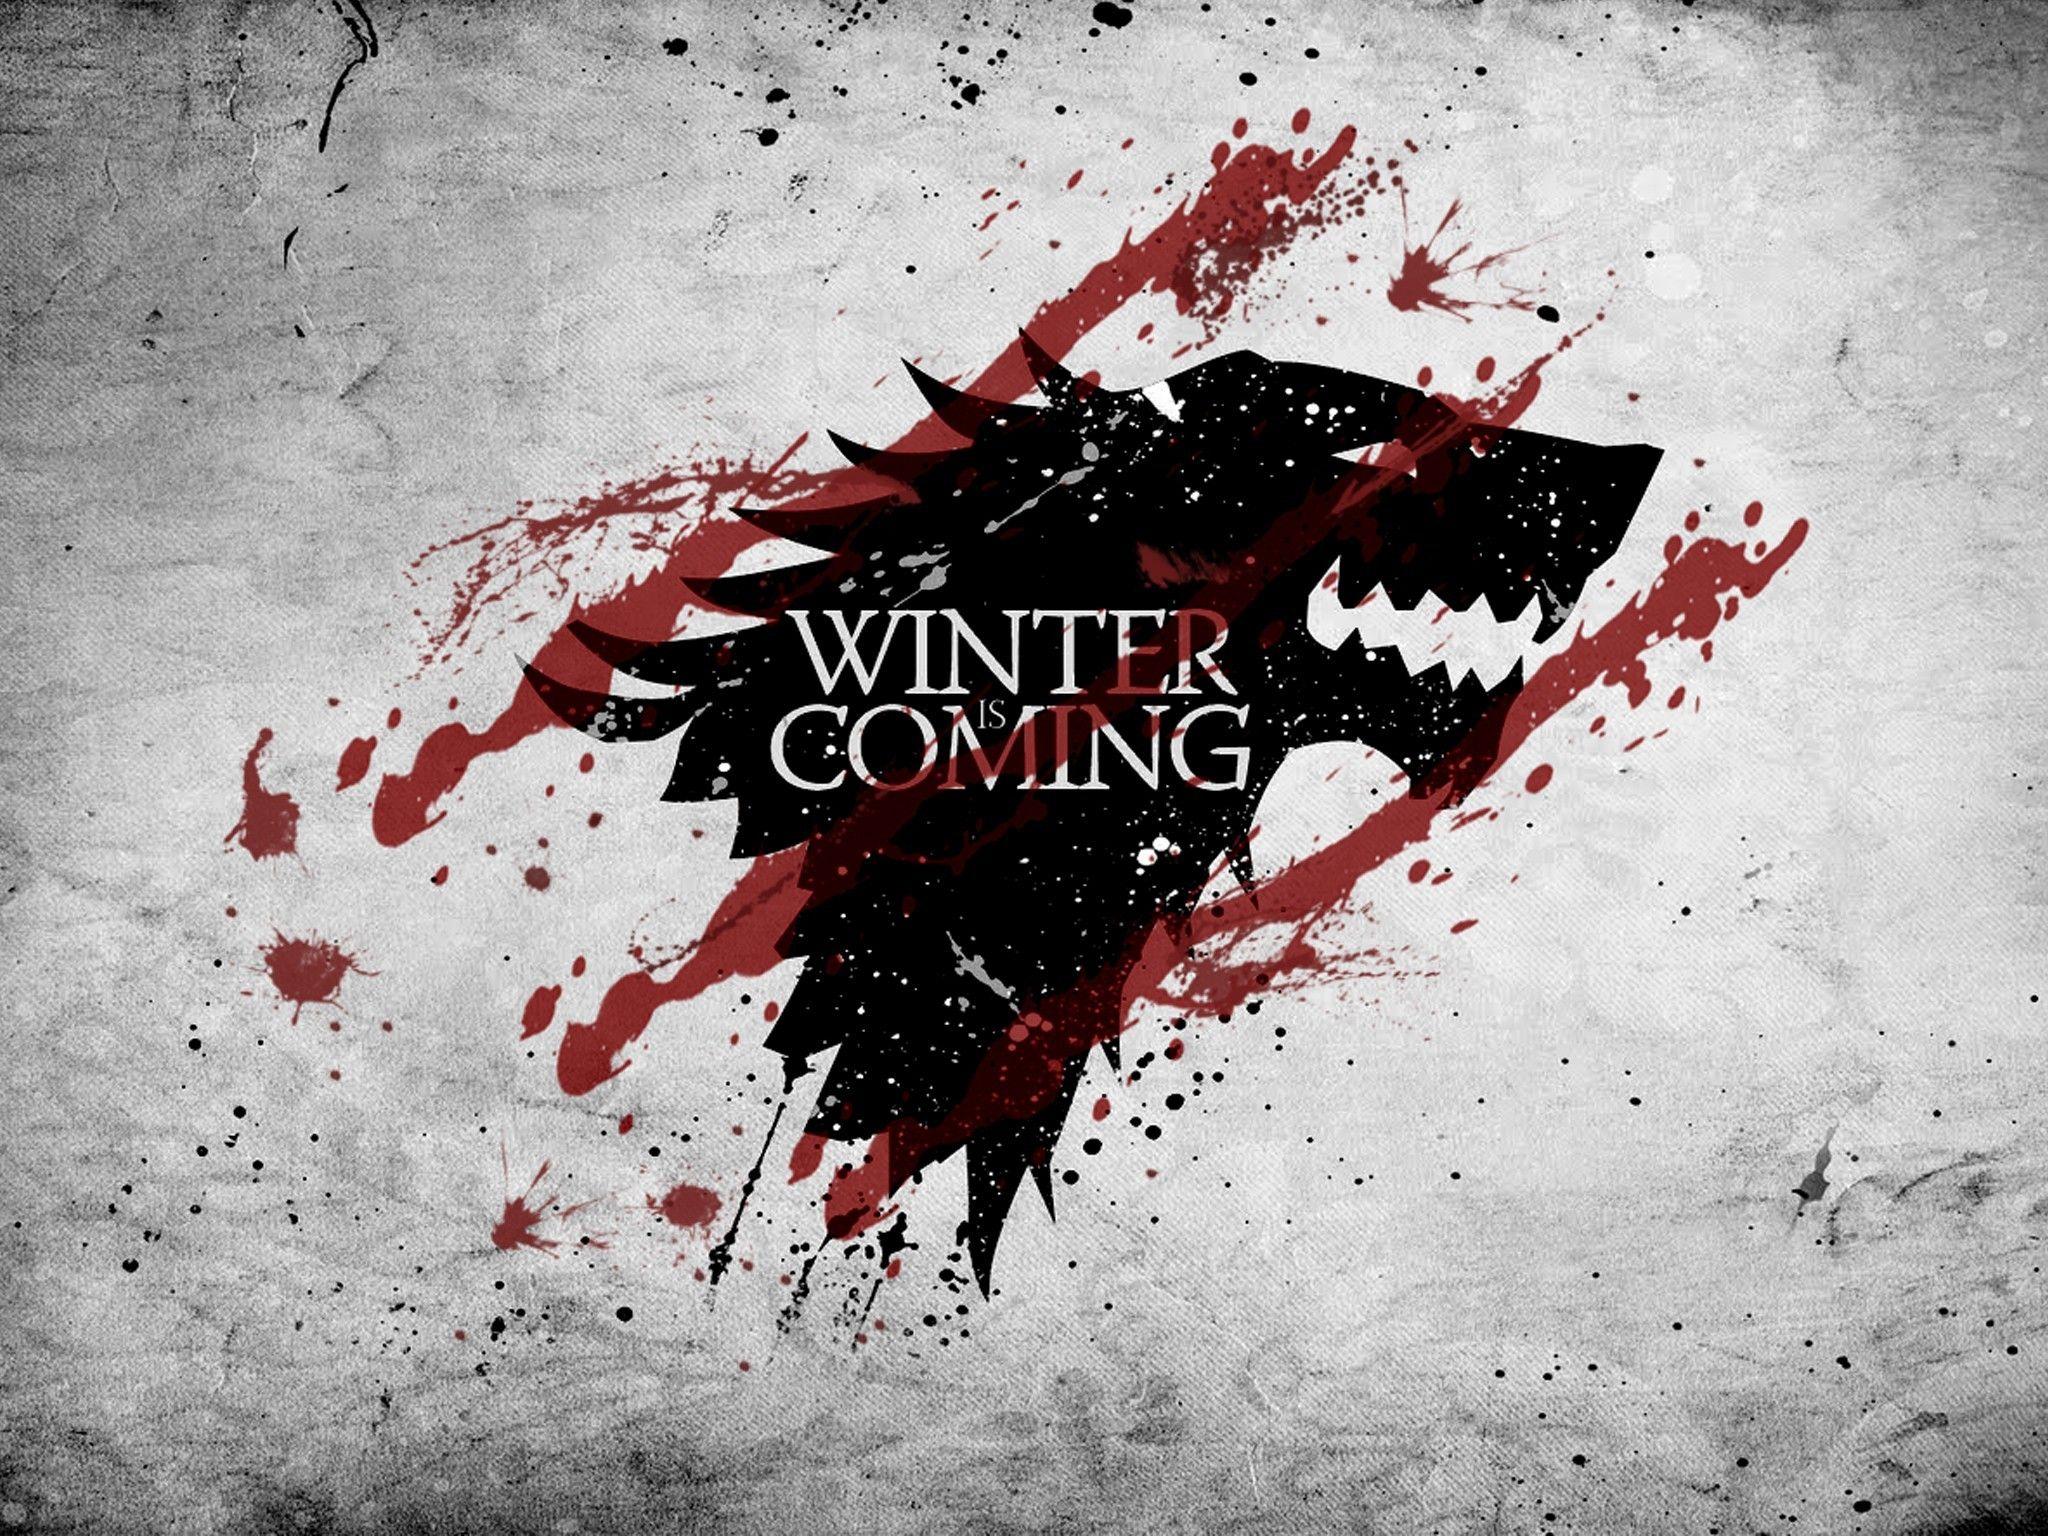 Game of Thrones Stark Wallpapers - Top Free Game of Thrones Stark